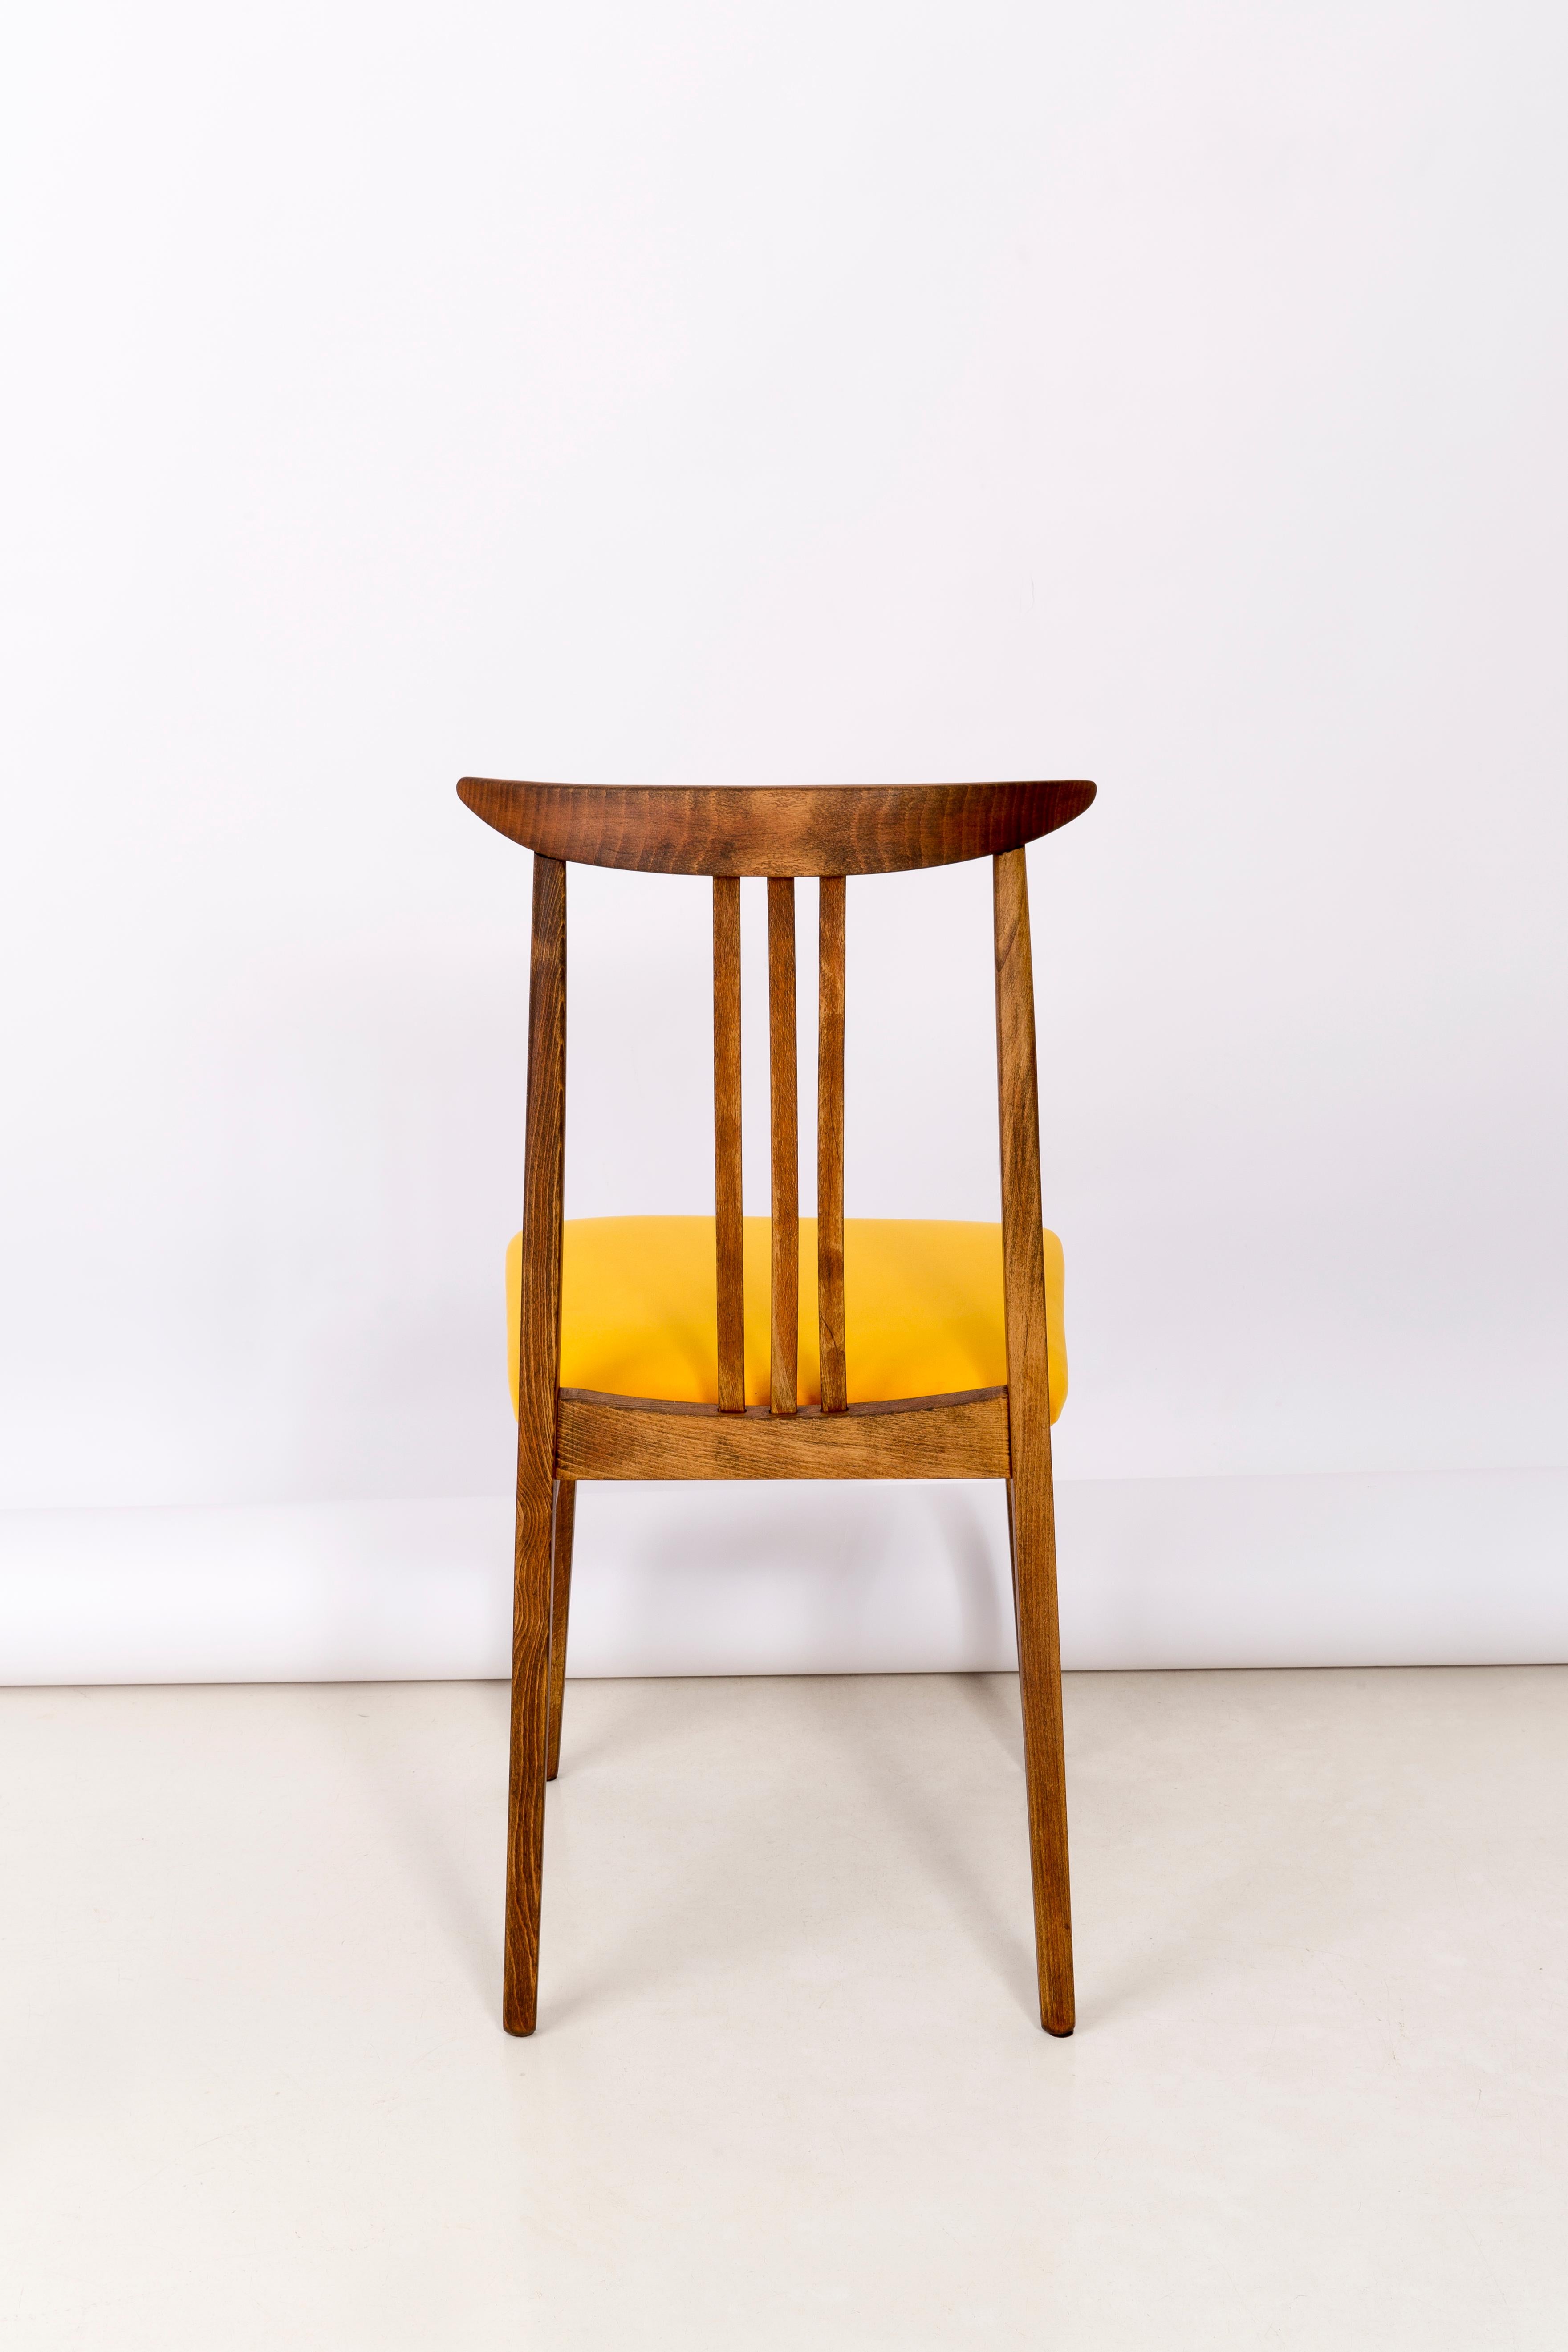 20th Century Mid-Century Modern Yellow Velvet Chair, by Zielinski, Poland, 1960s For Sale